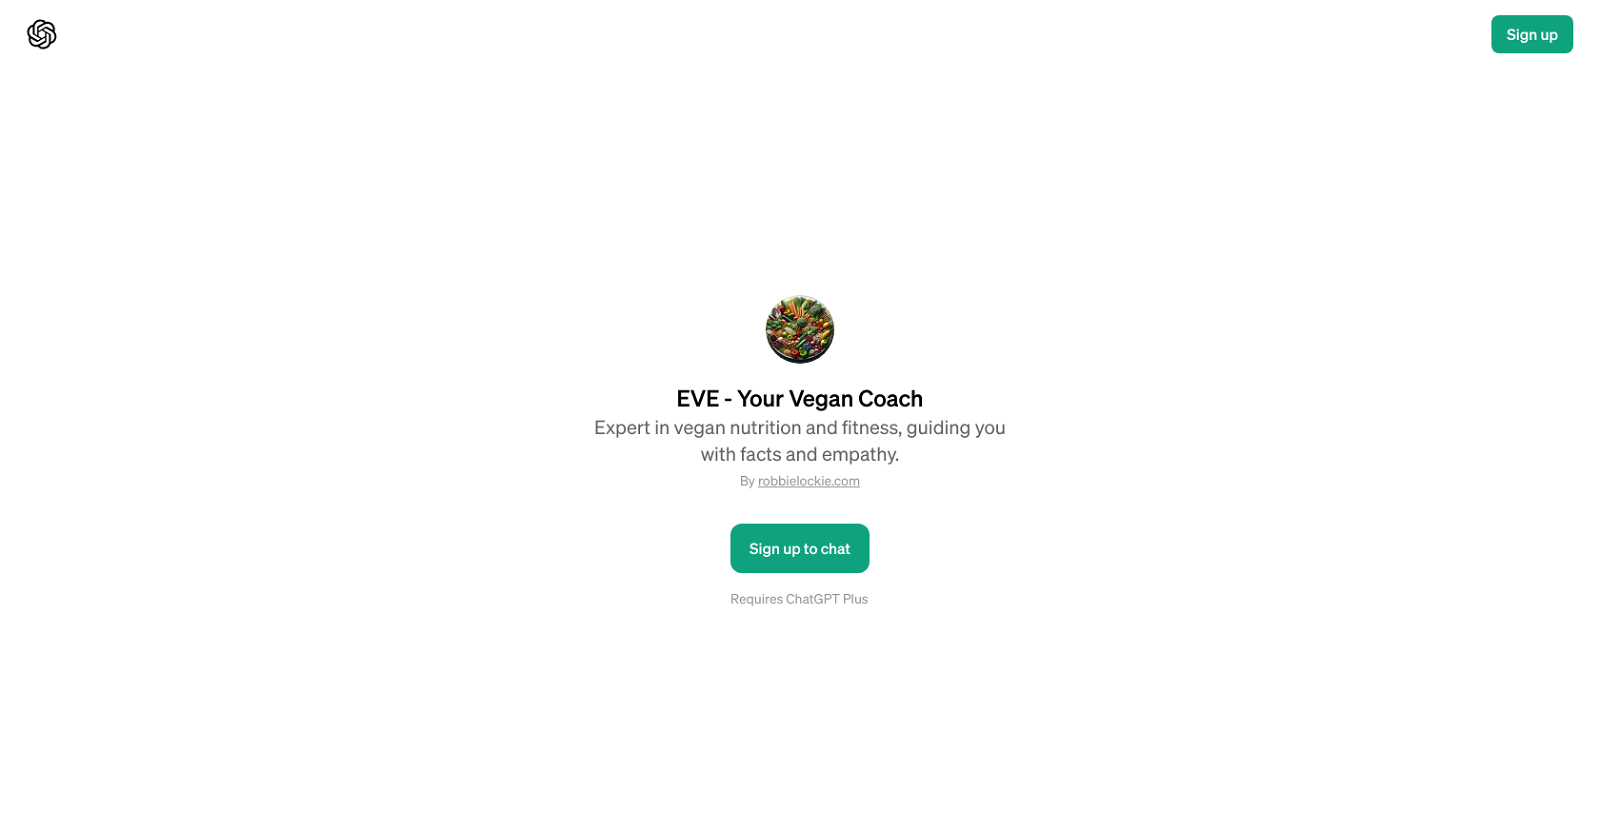 EVE - Your Vegan Coach website